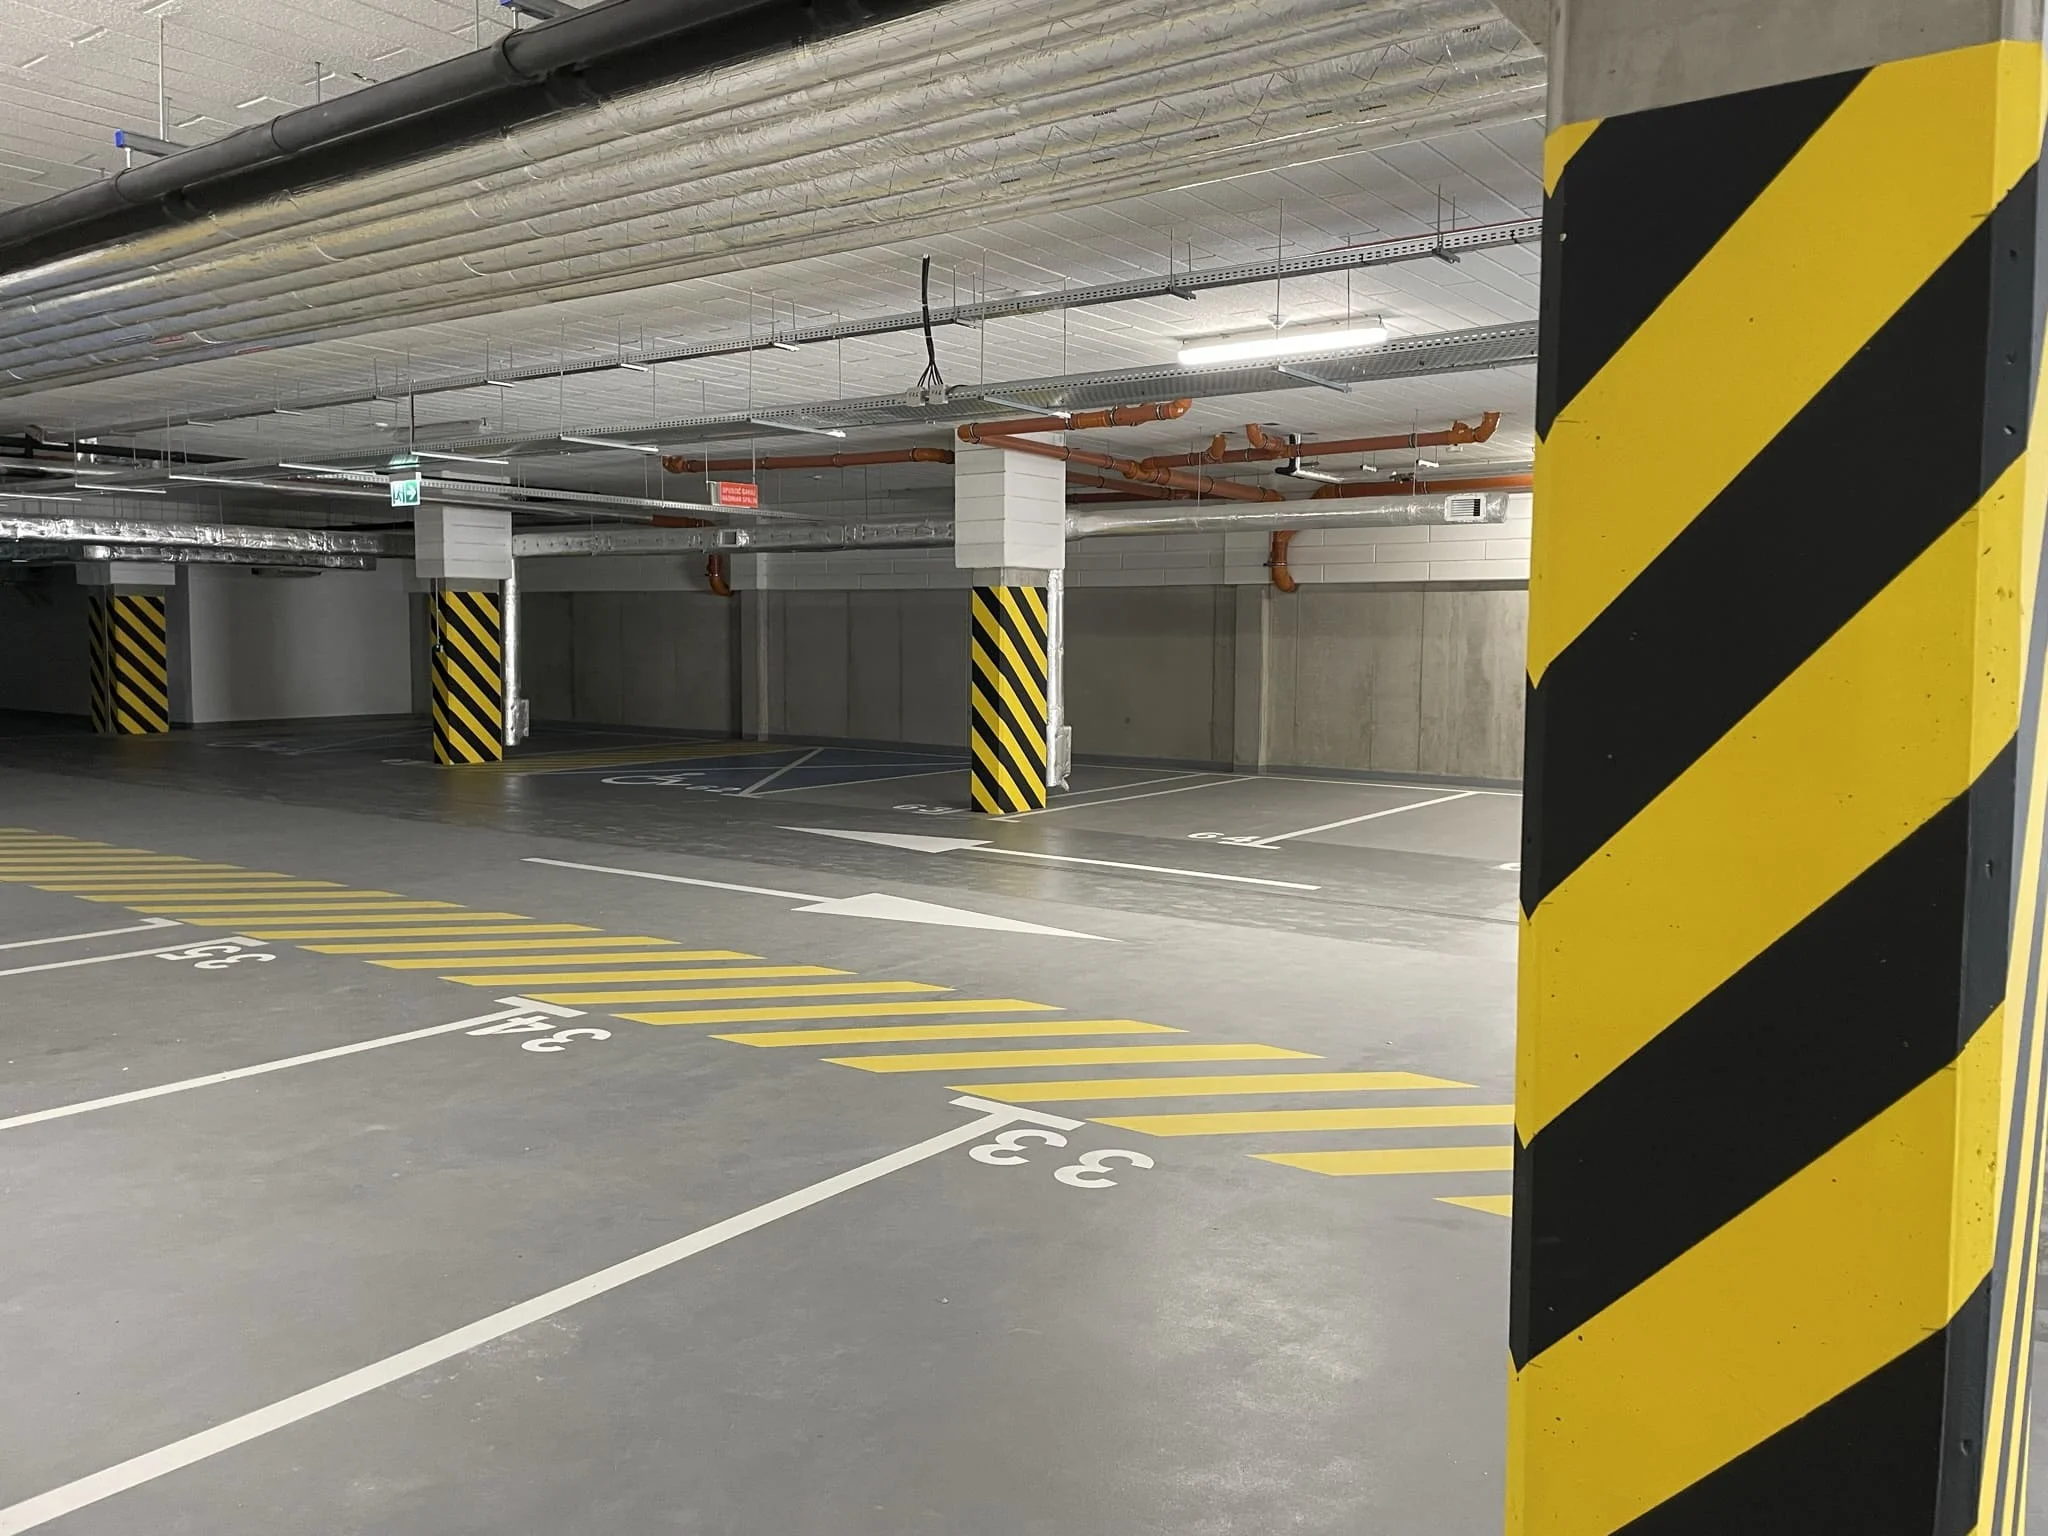 Parking floor (concrete, resin)